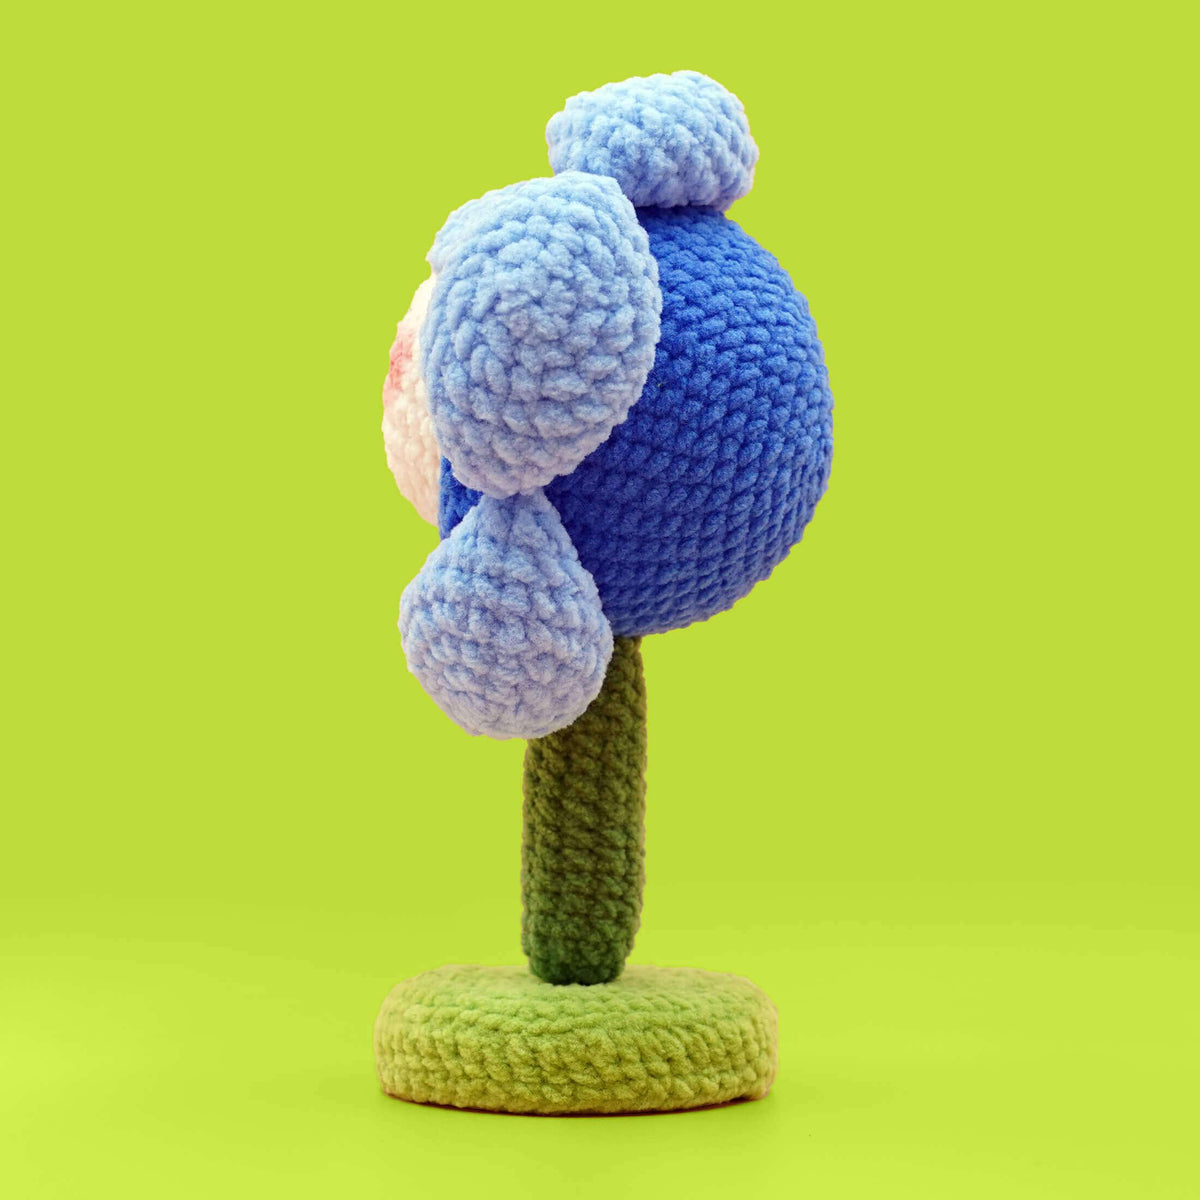 Amigurumi Blue Flower Crochet Kit - HiCrochet